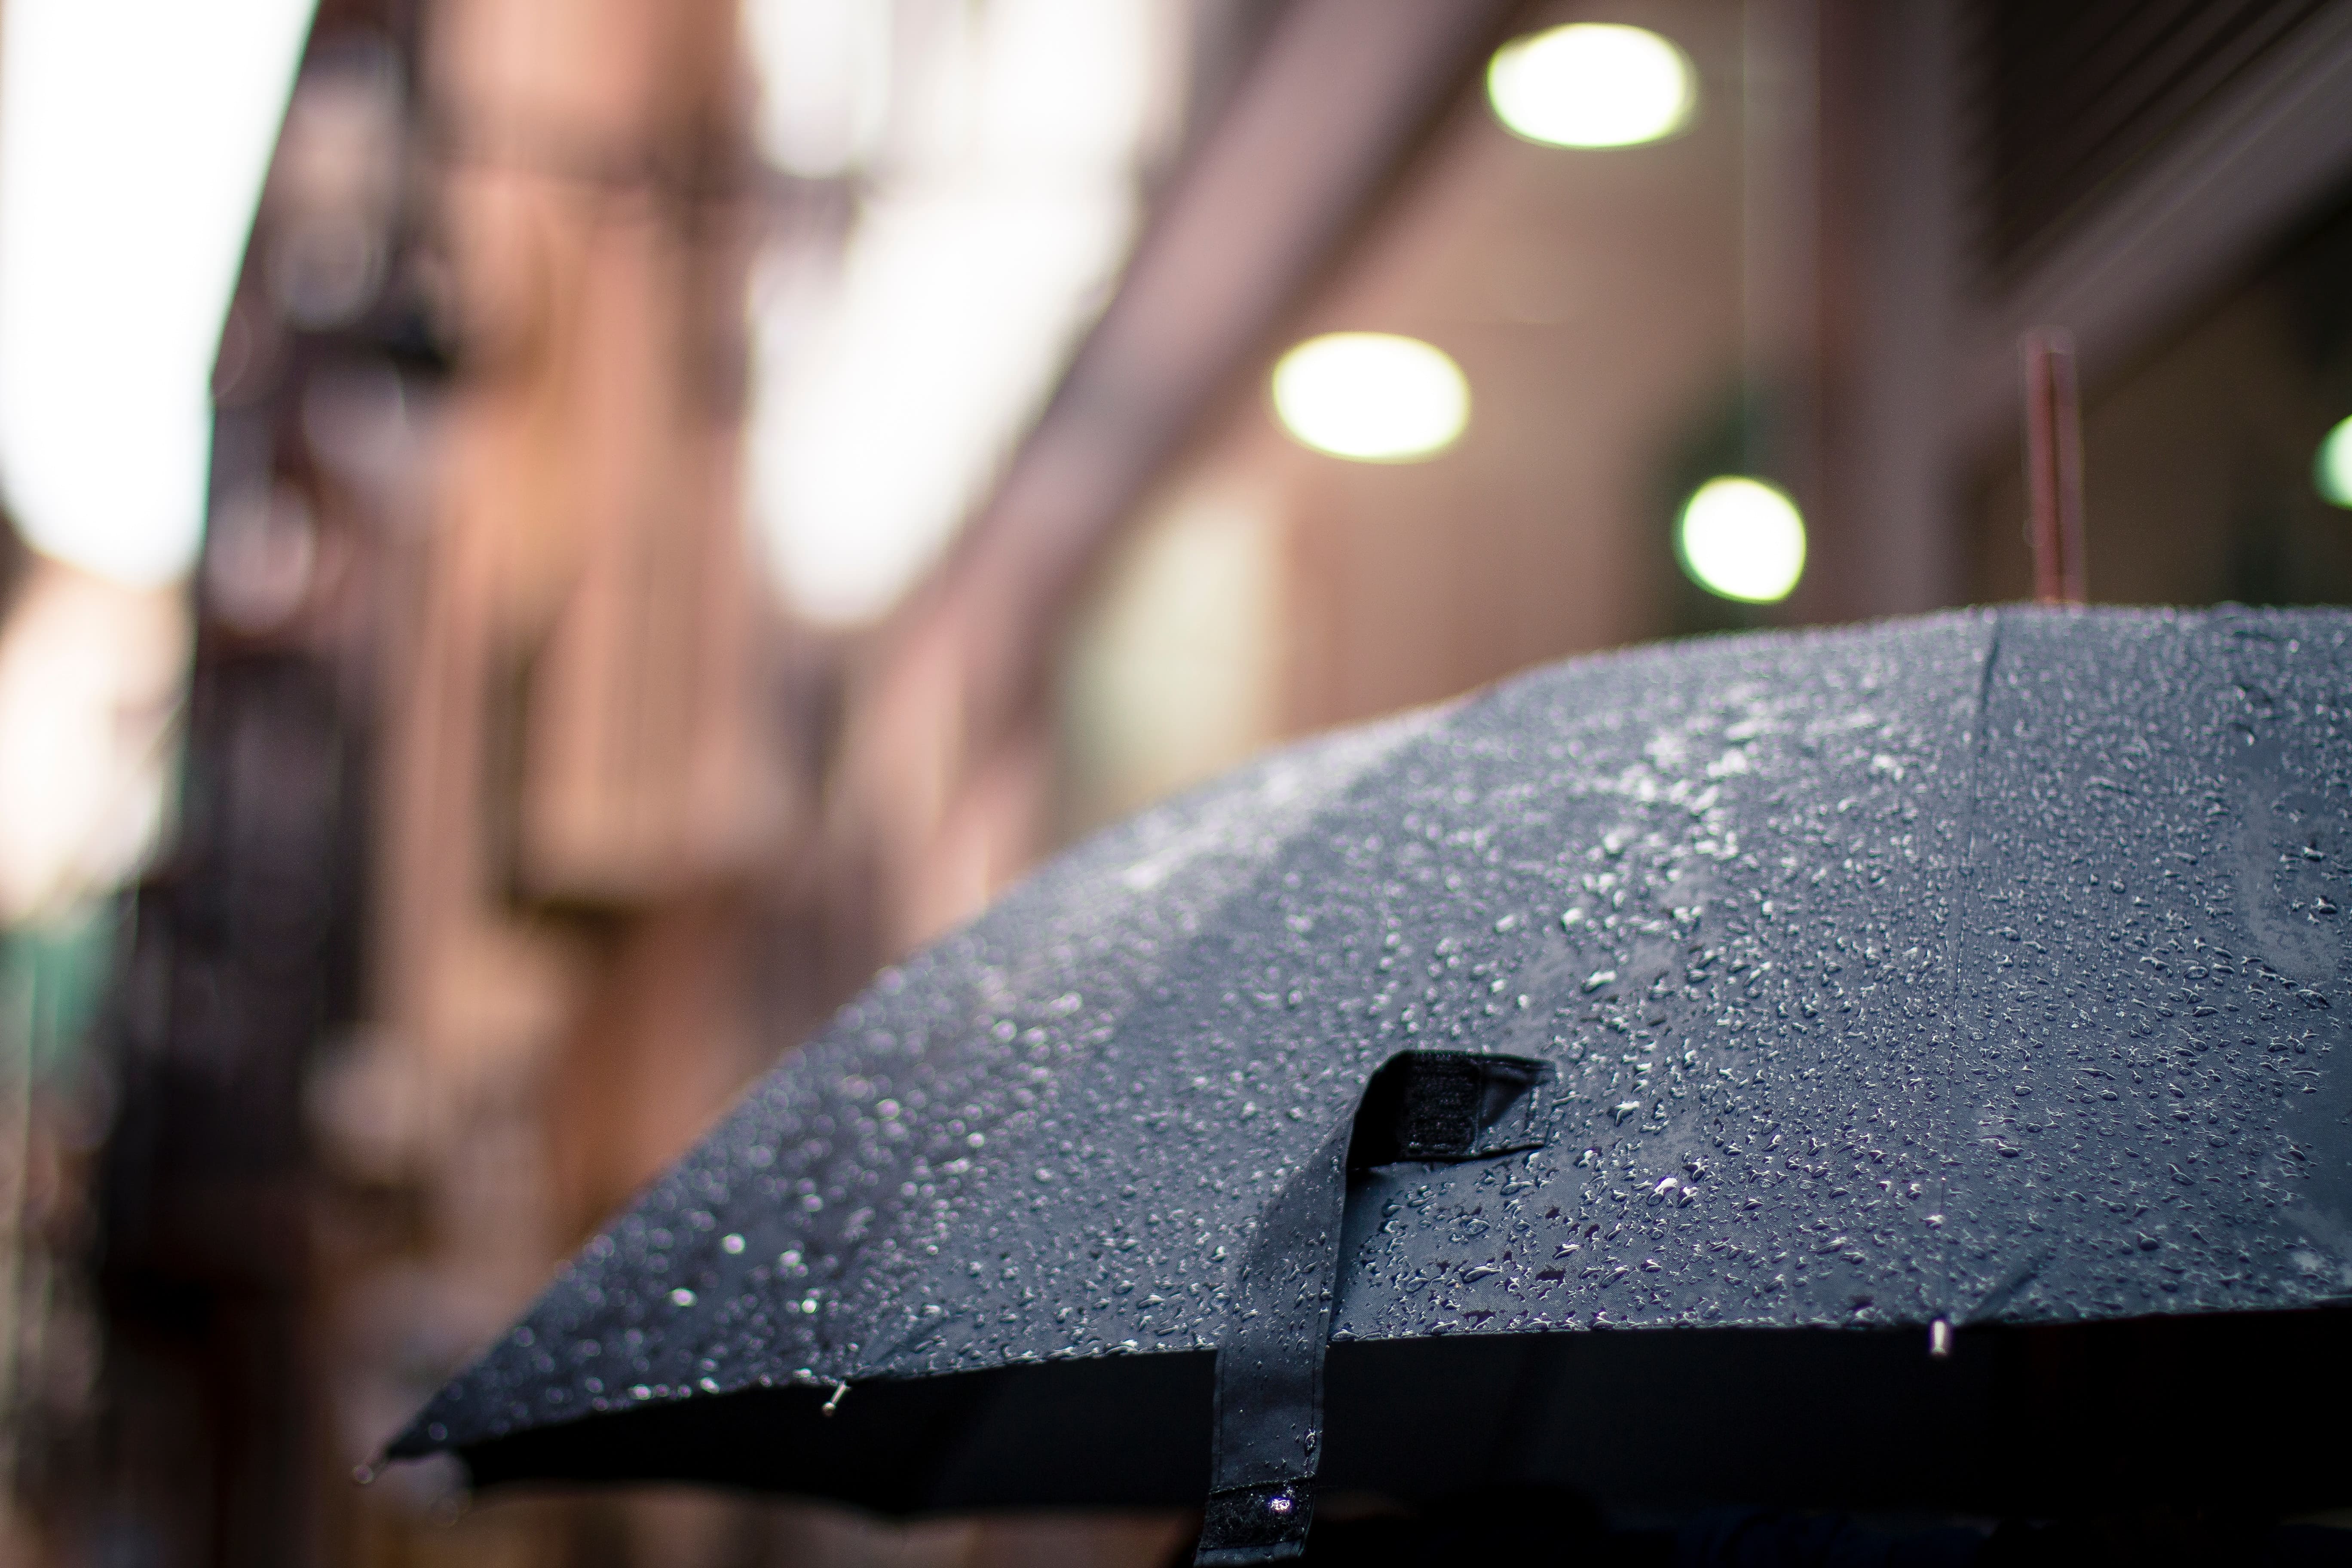 Rain falling on Umbrella